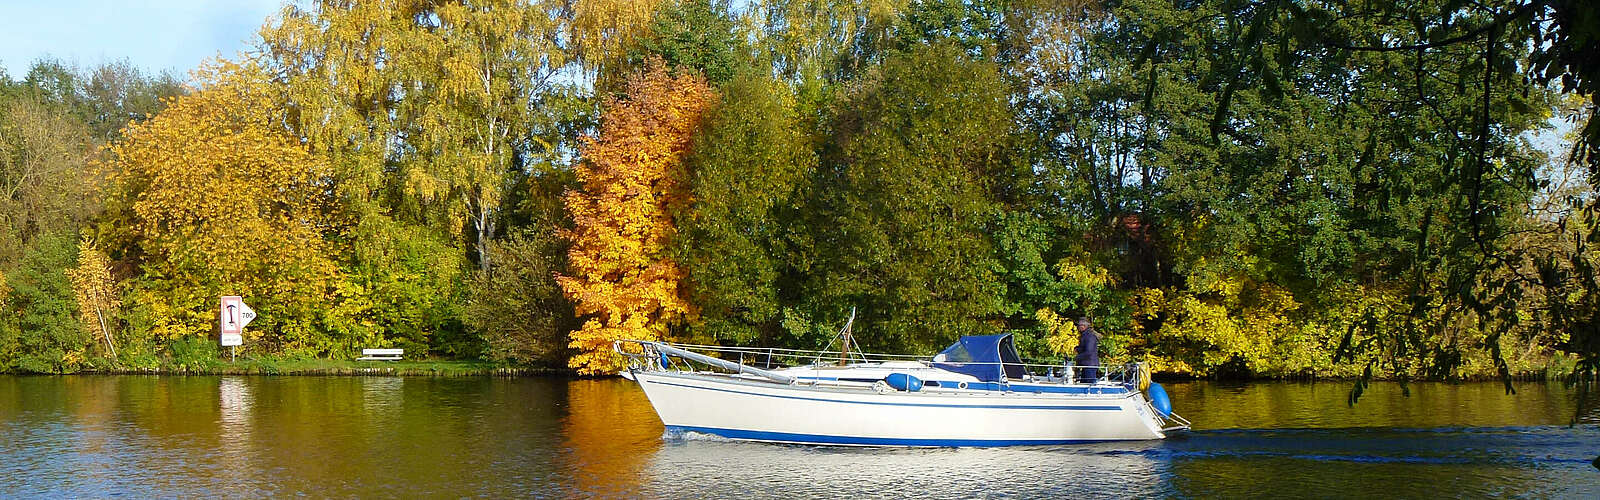 Segelboot_Herbst,
        
    

        Foto: Tourismusverband Dahme-Seenland e.V./Juliane Frank